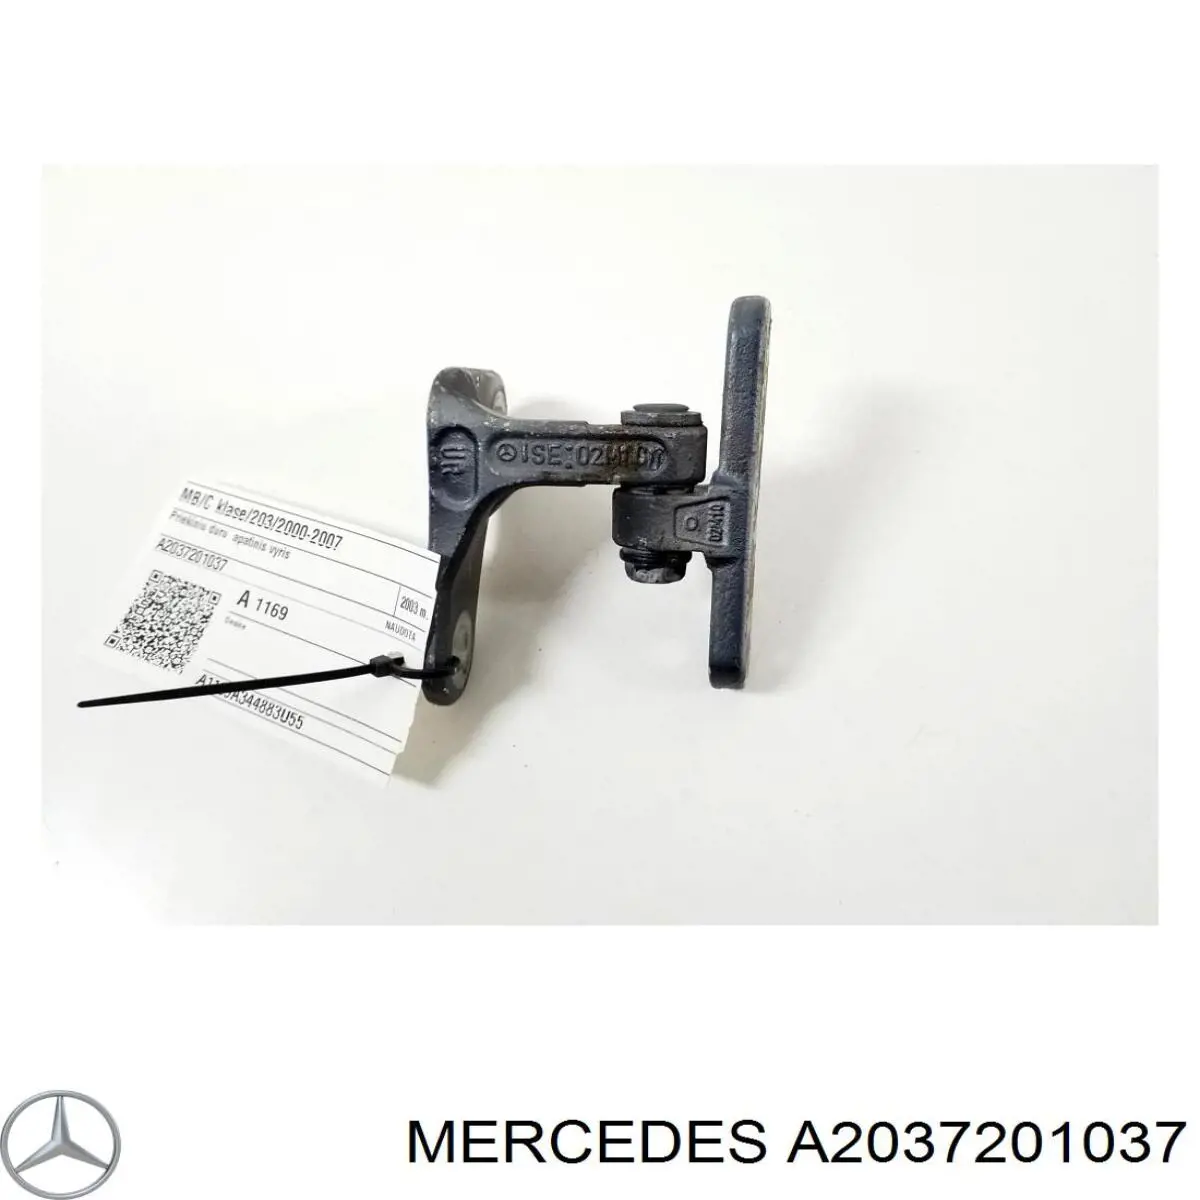 2037201037 Mercedes bisagra de puerta delantera derecha